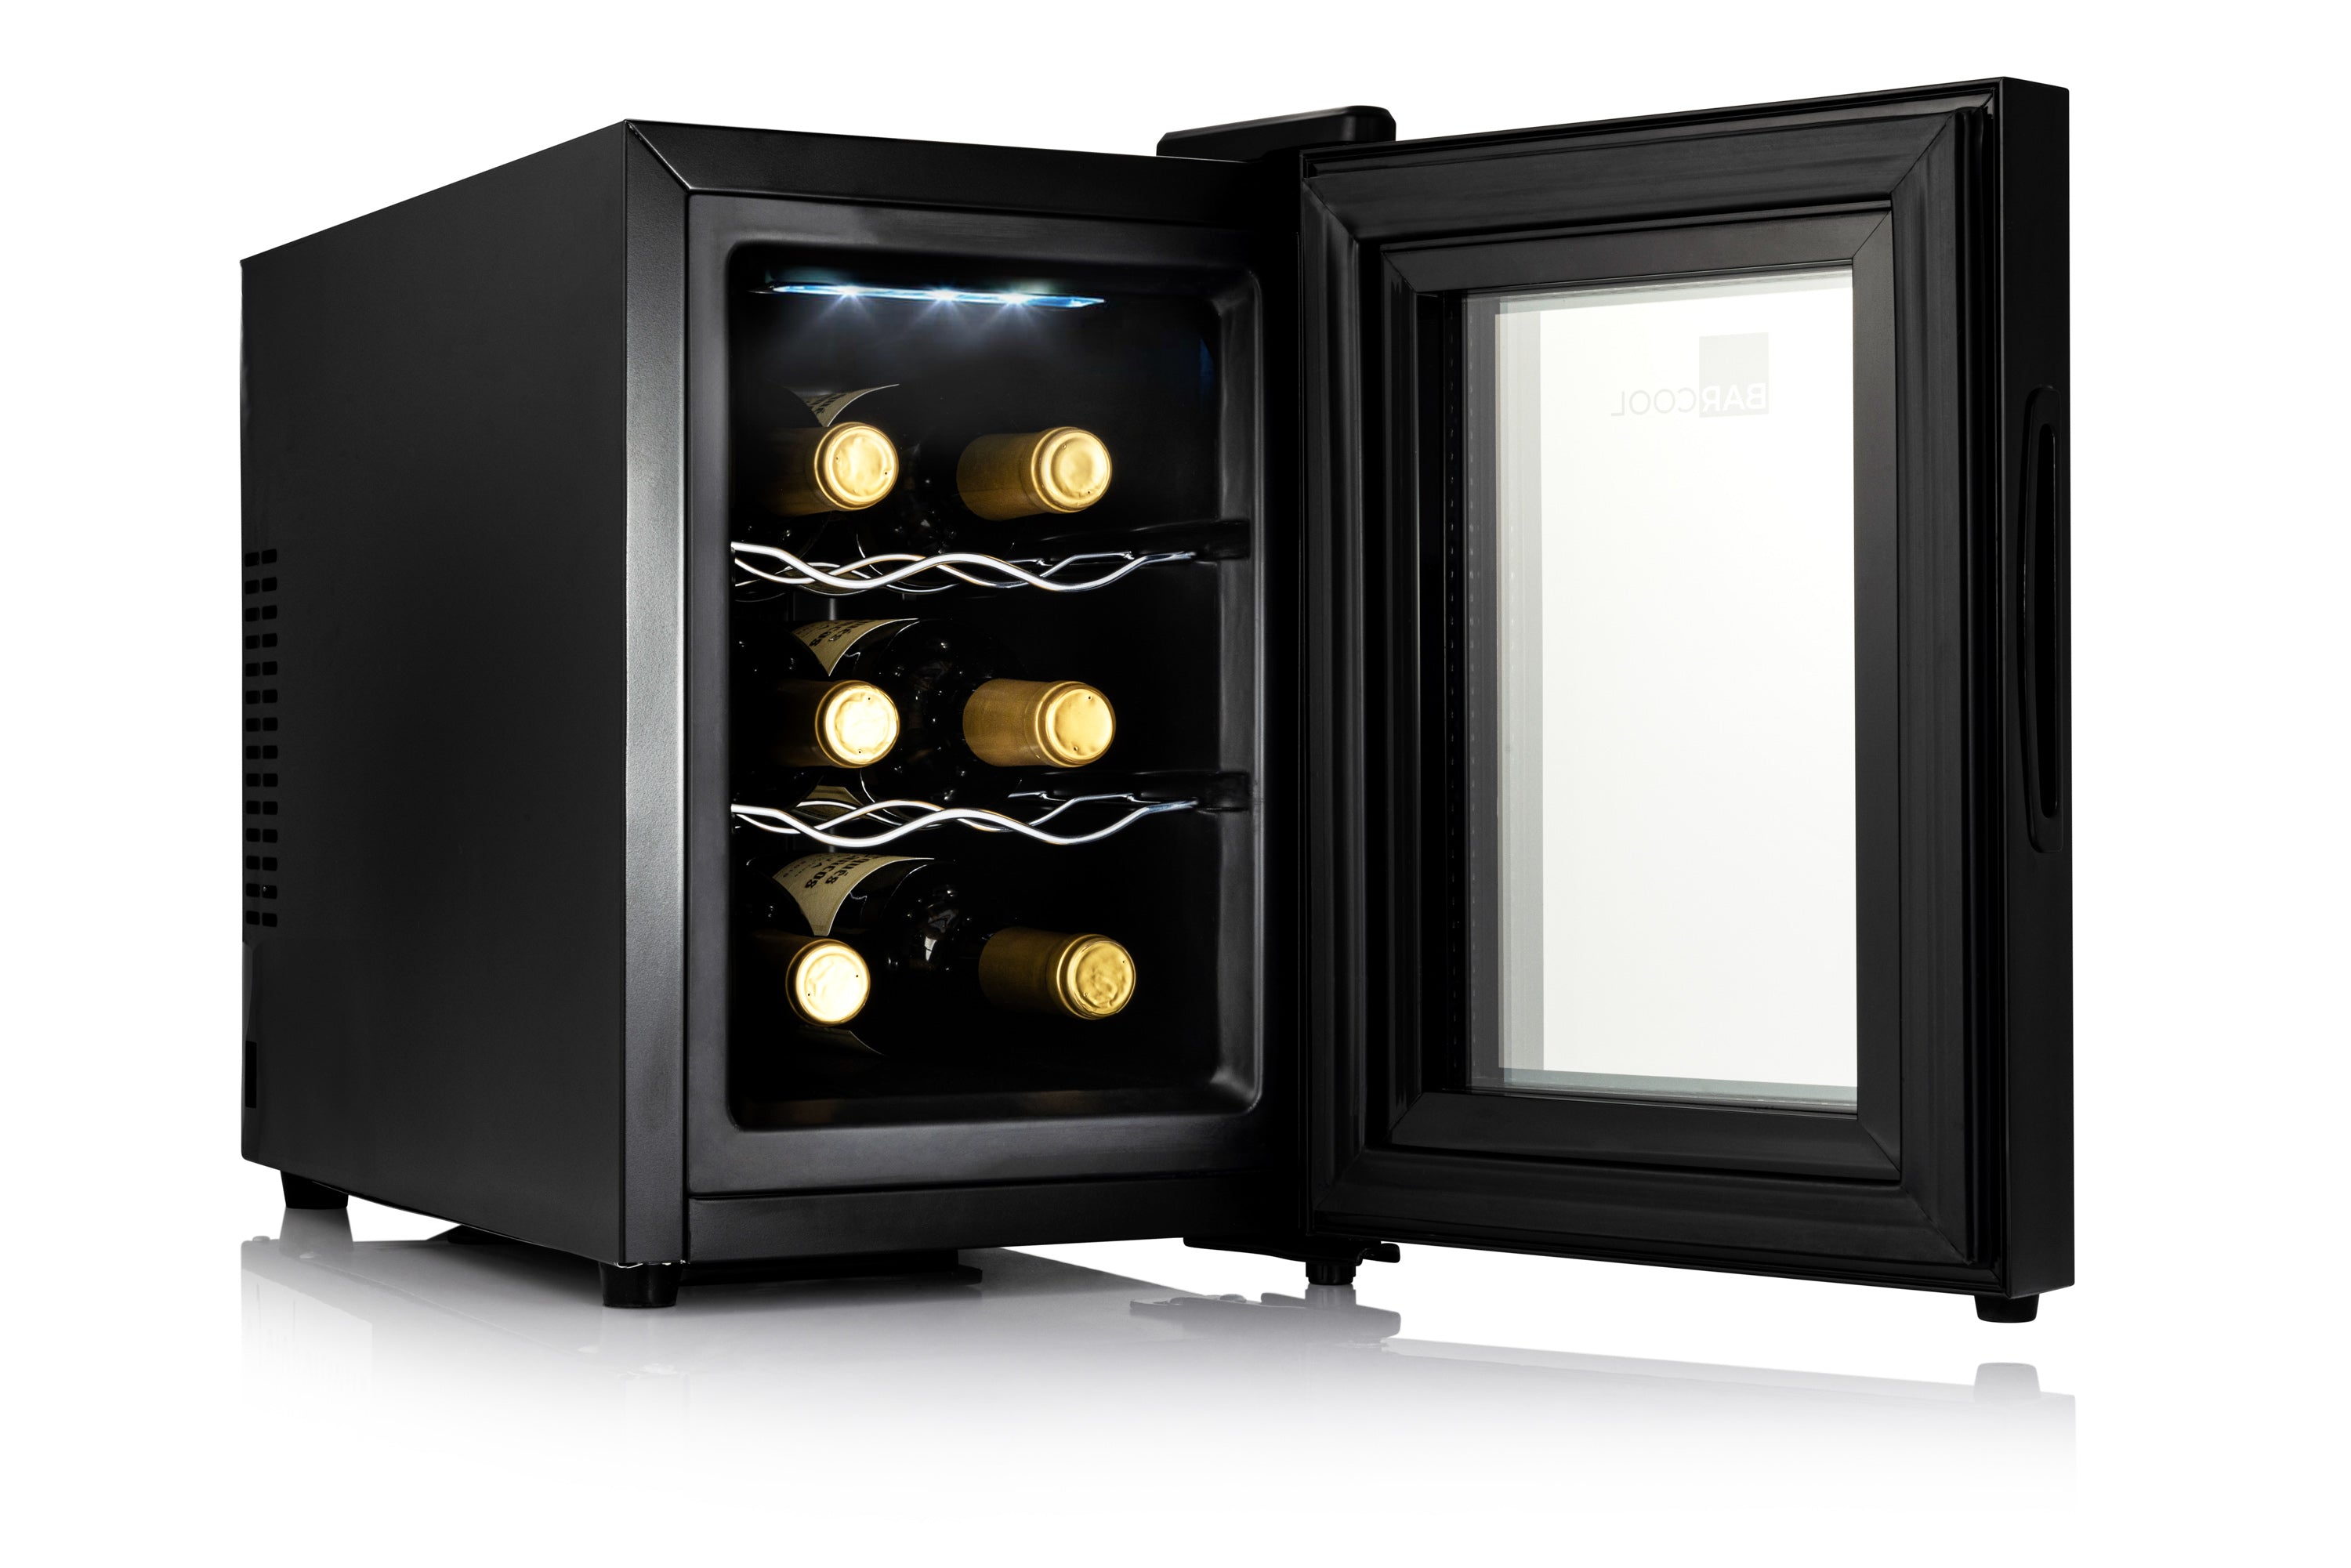 Subcold Viva wine cooler fridge with LED light